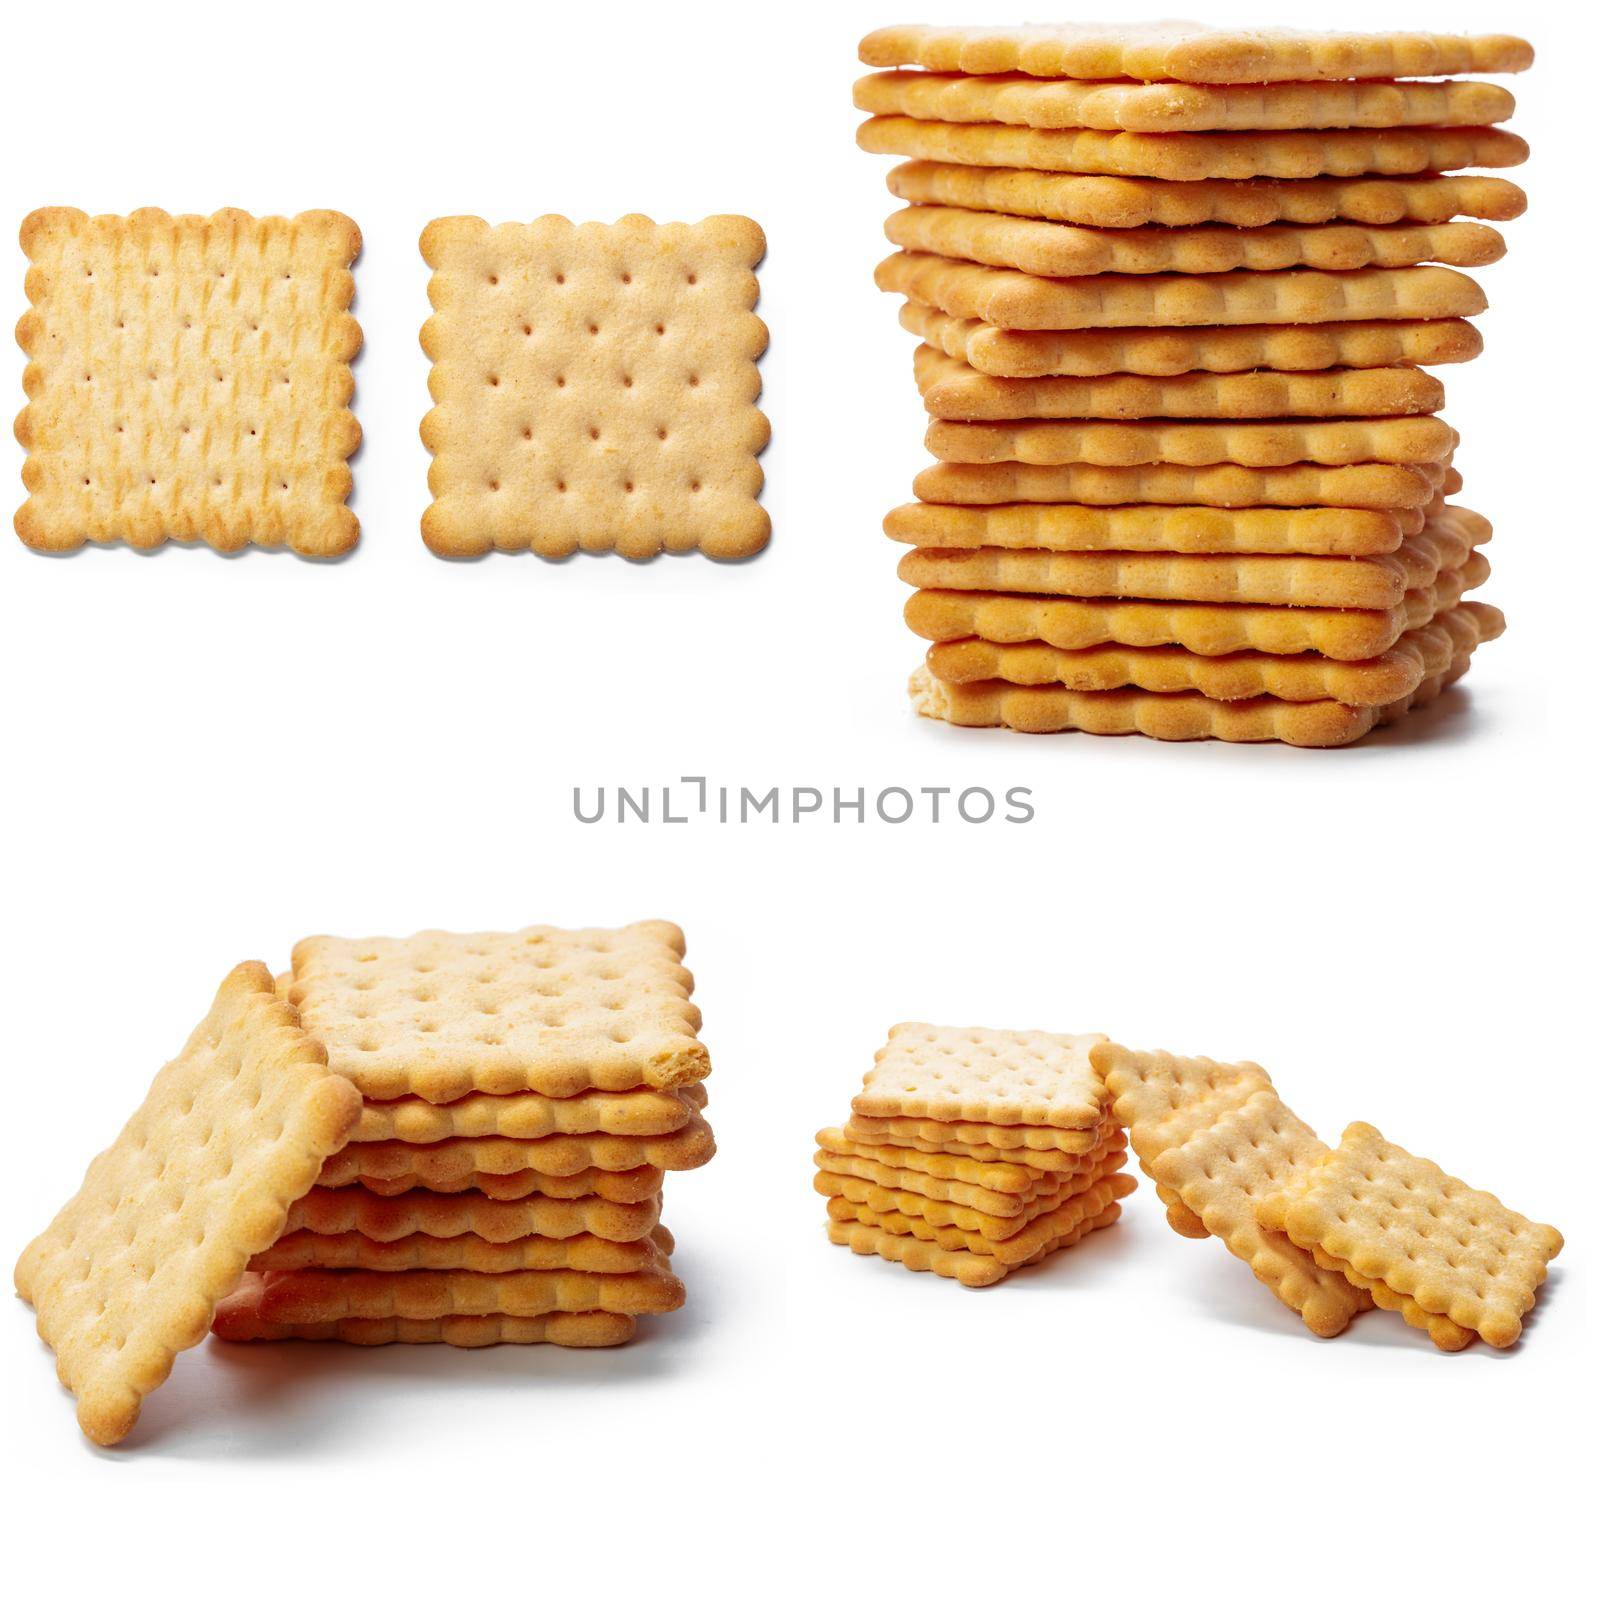 Cracker snacks isolated on over white background